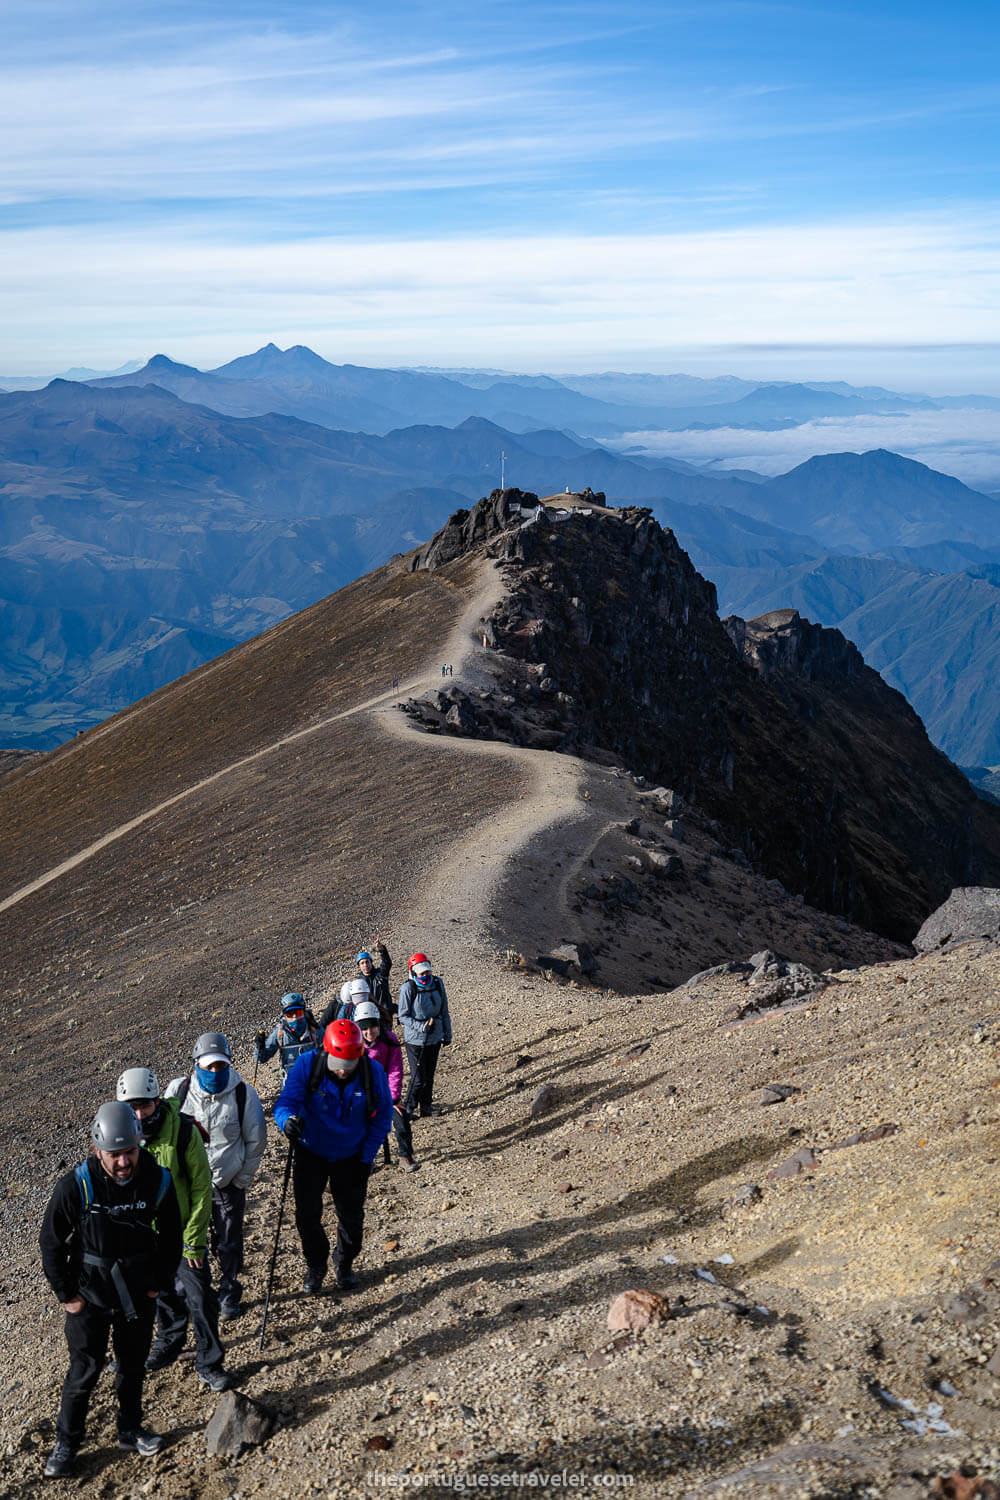 The group on its way to the summit of Guagua Pichincha's volcano